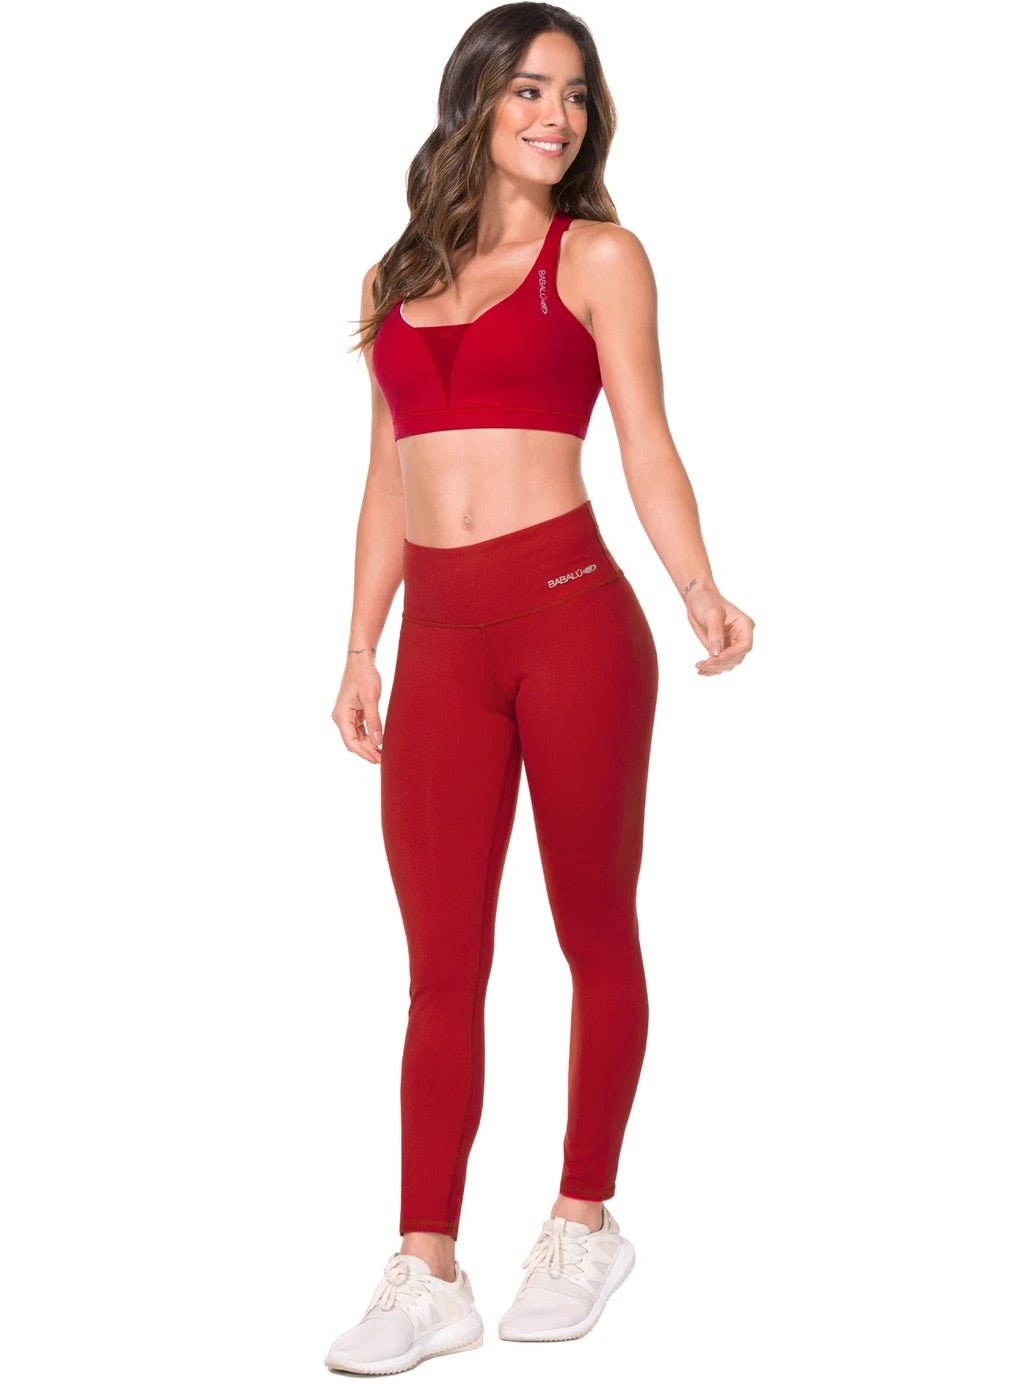 Leggings high-waist sportswear Sale  Curvas Latina Switzerland Color RED  Size M